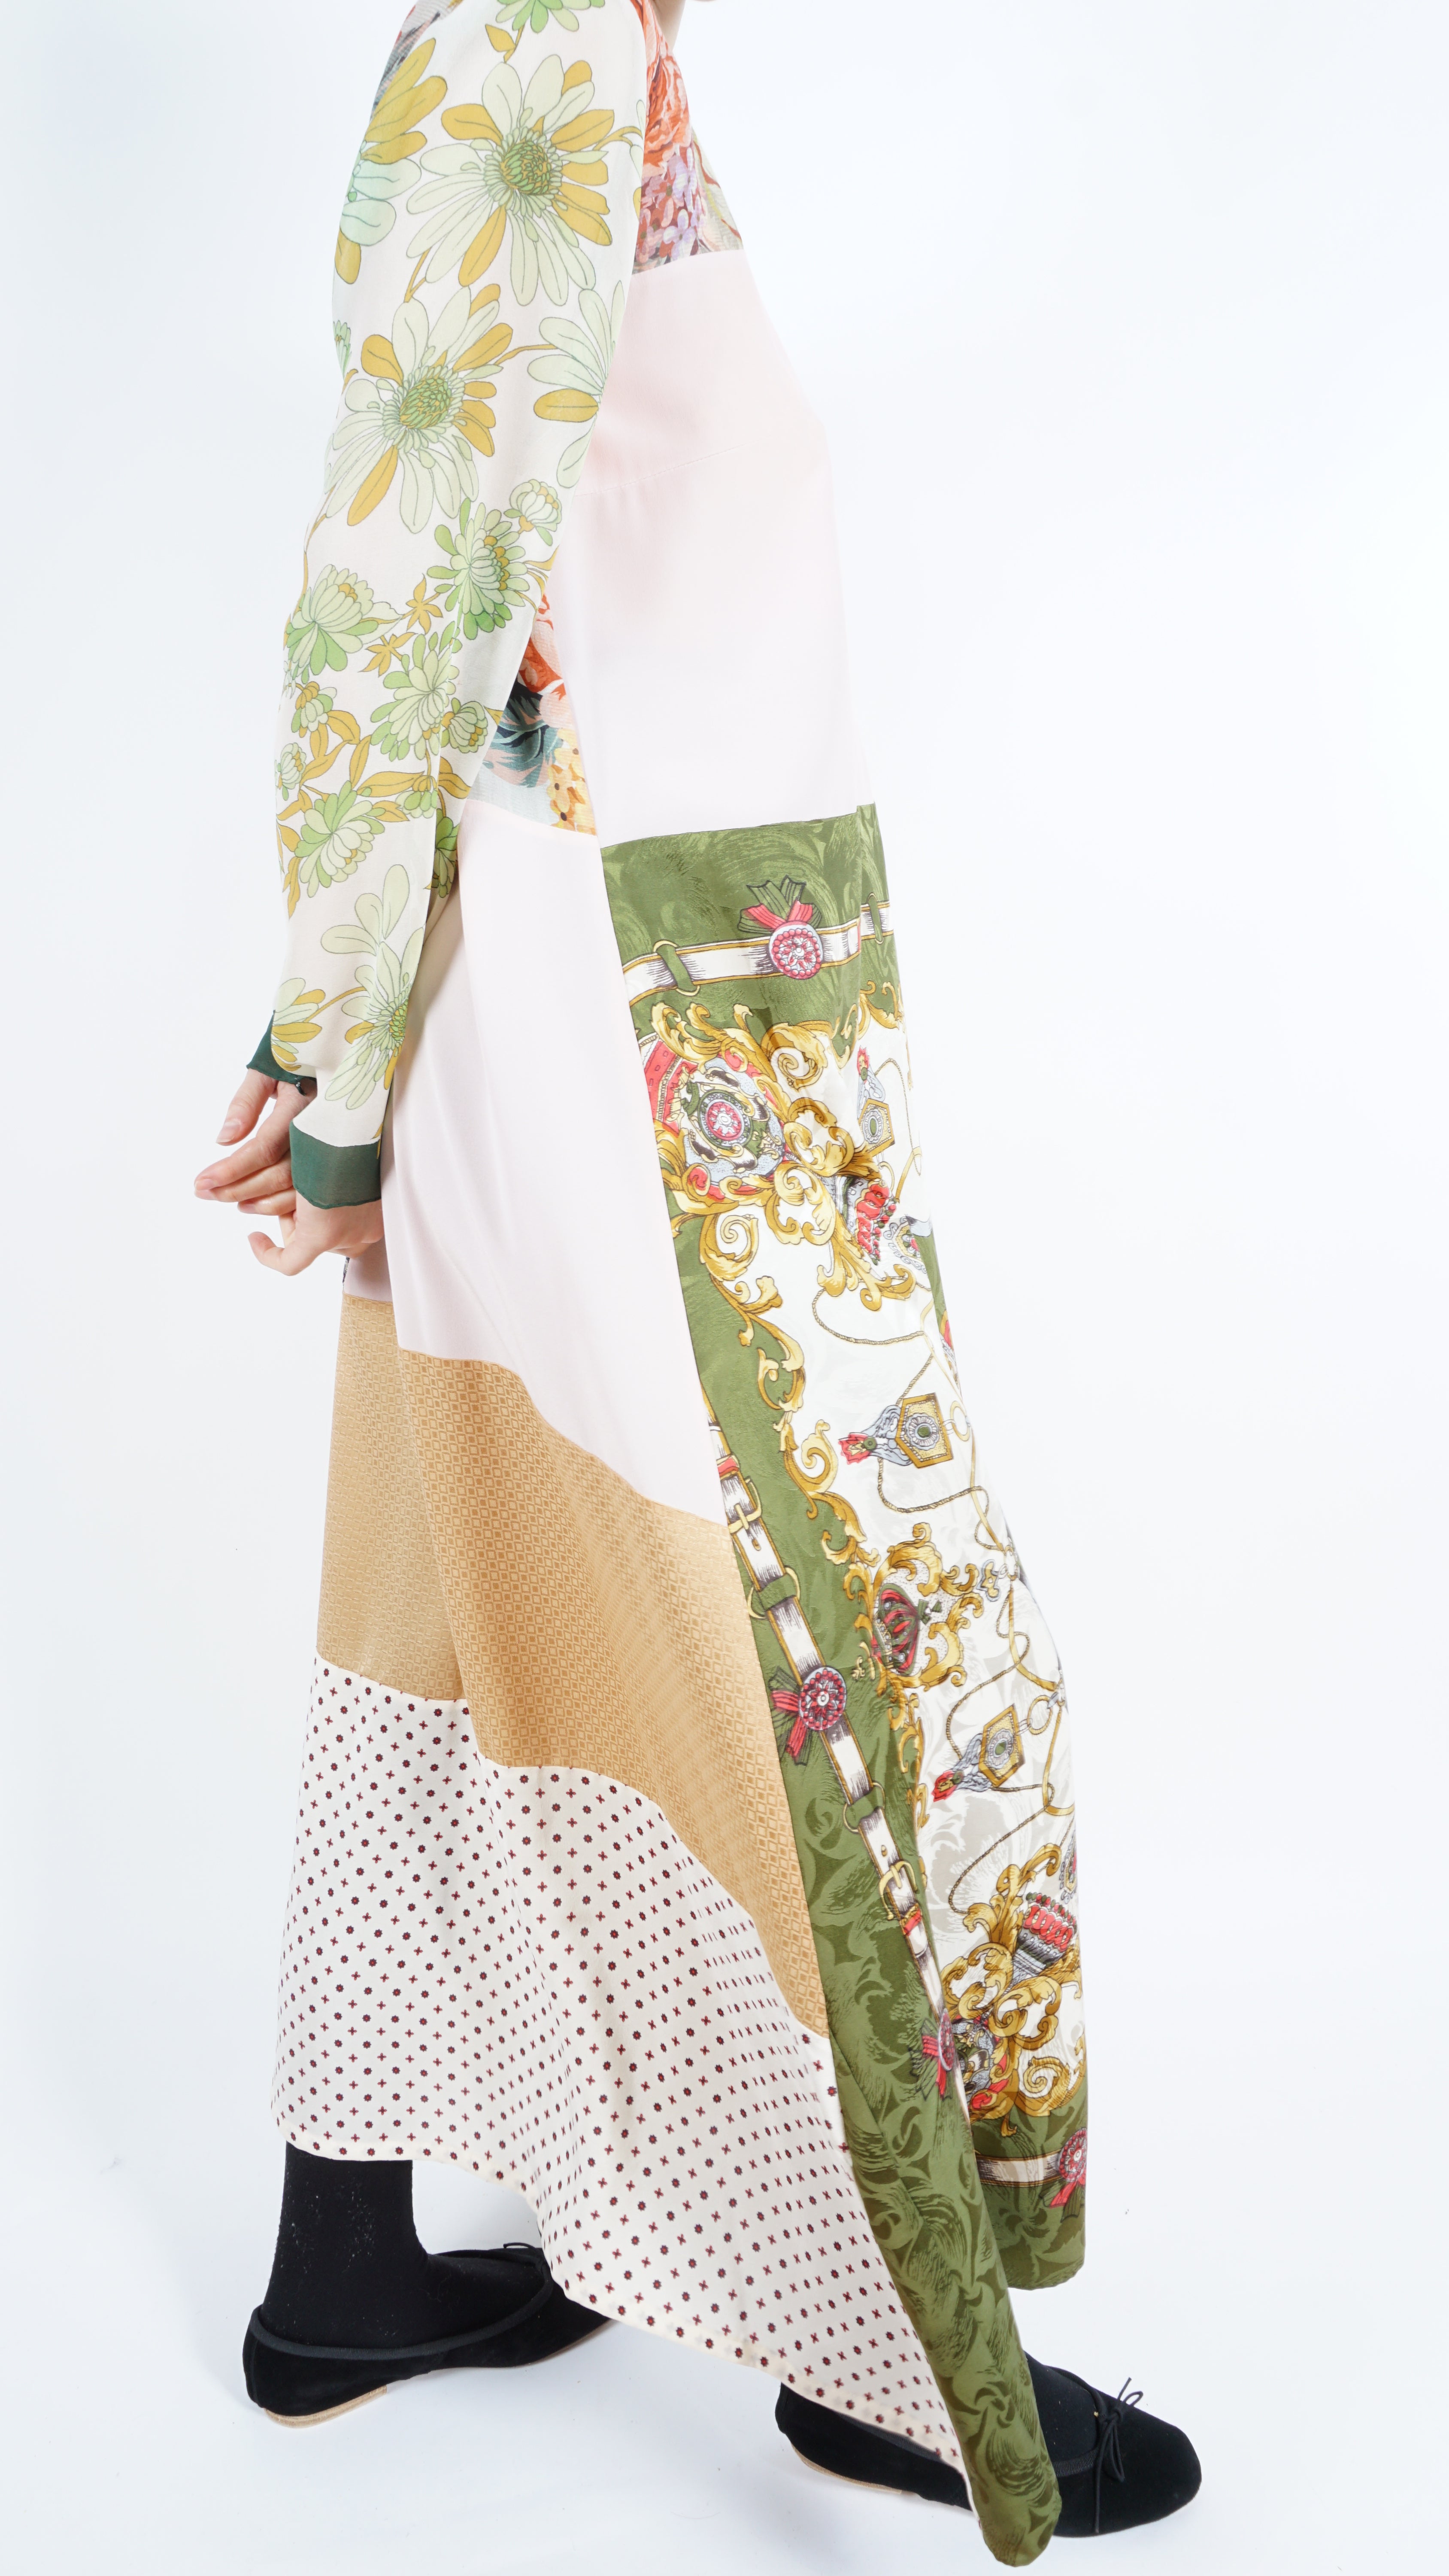 Silk dress by Bettina Bakdal